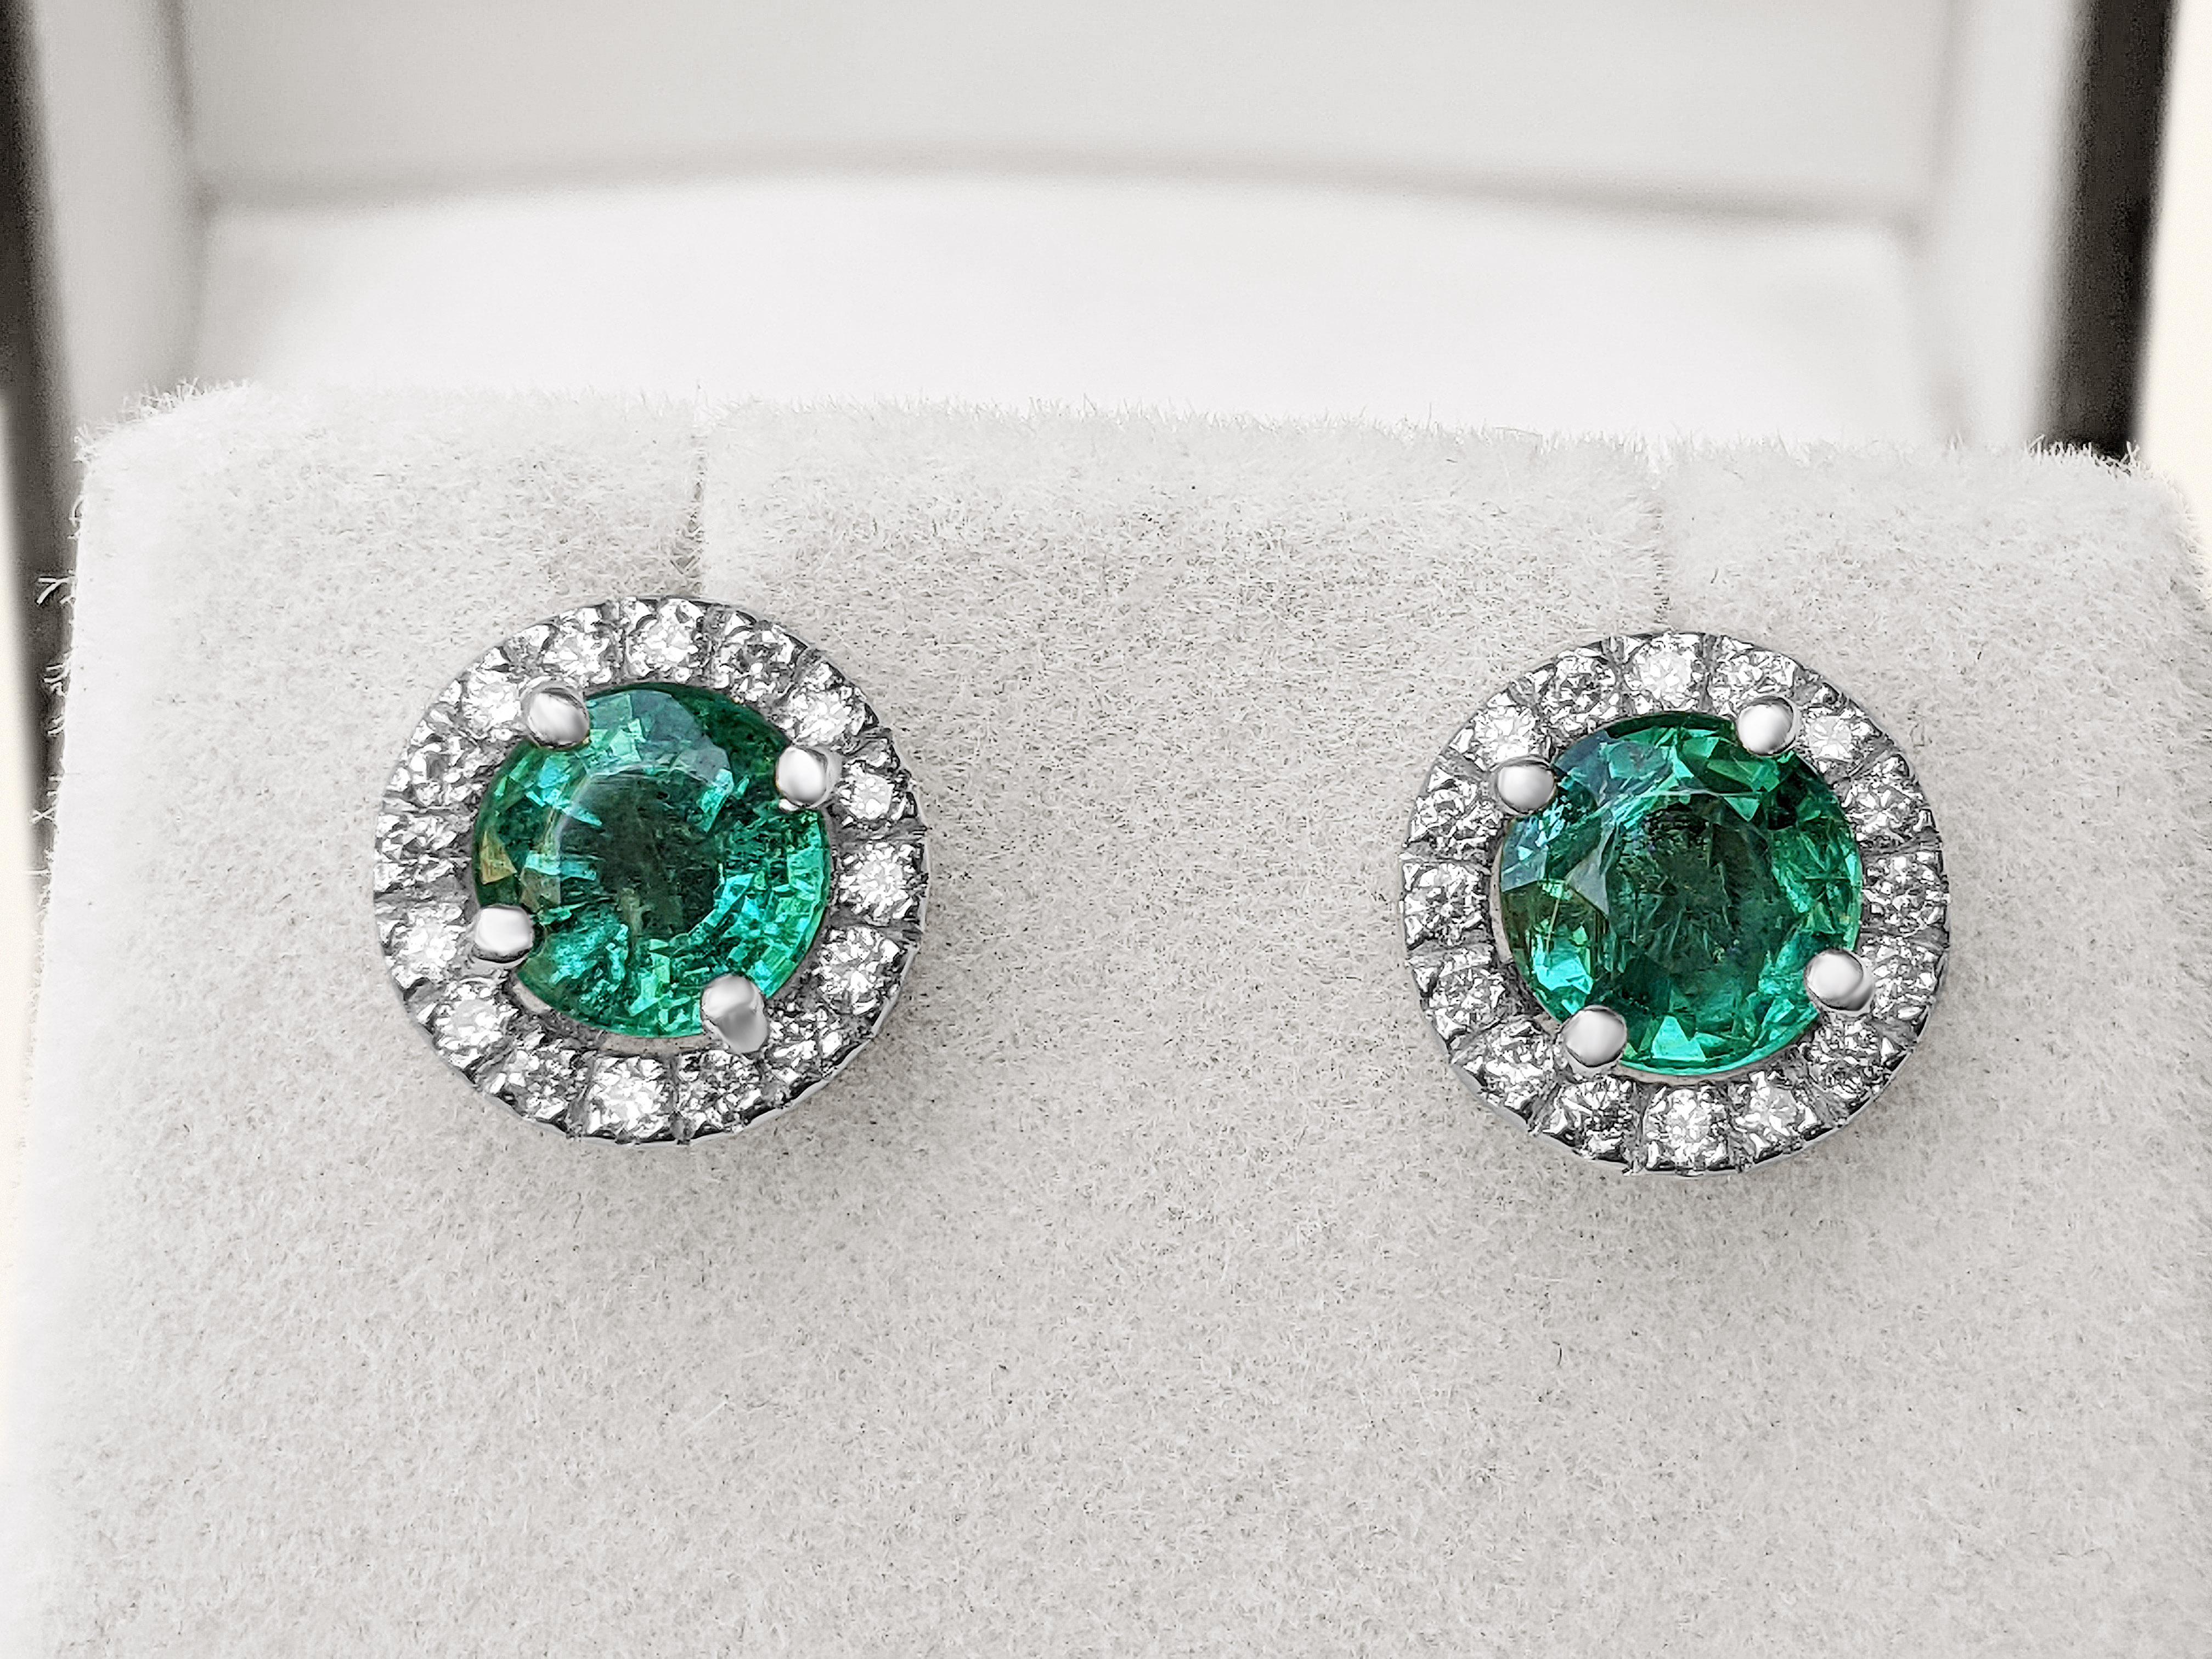 Round Cut 1.52 Carat Emerald and Diamonds Earrings